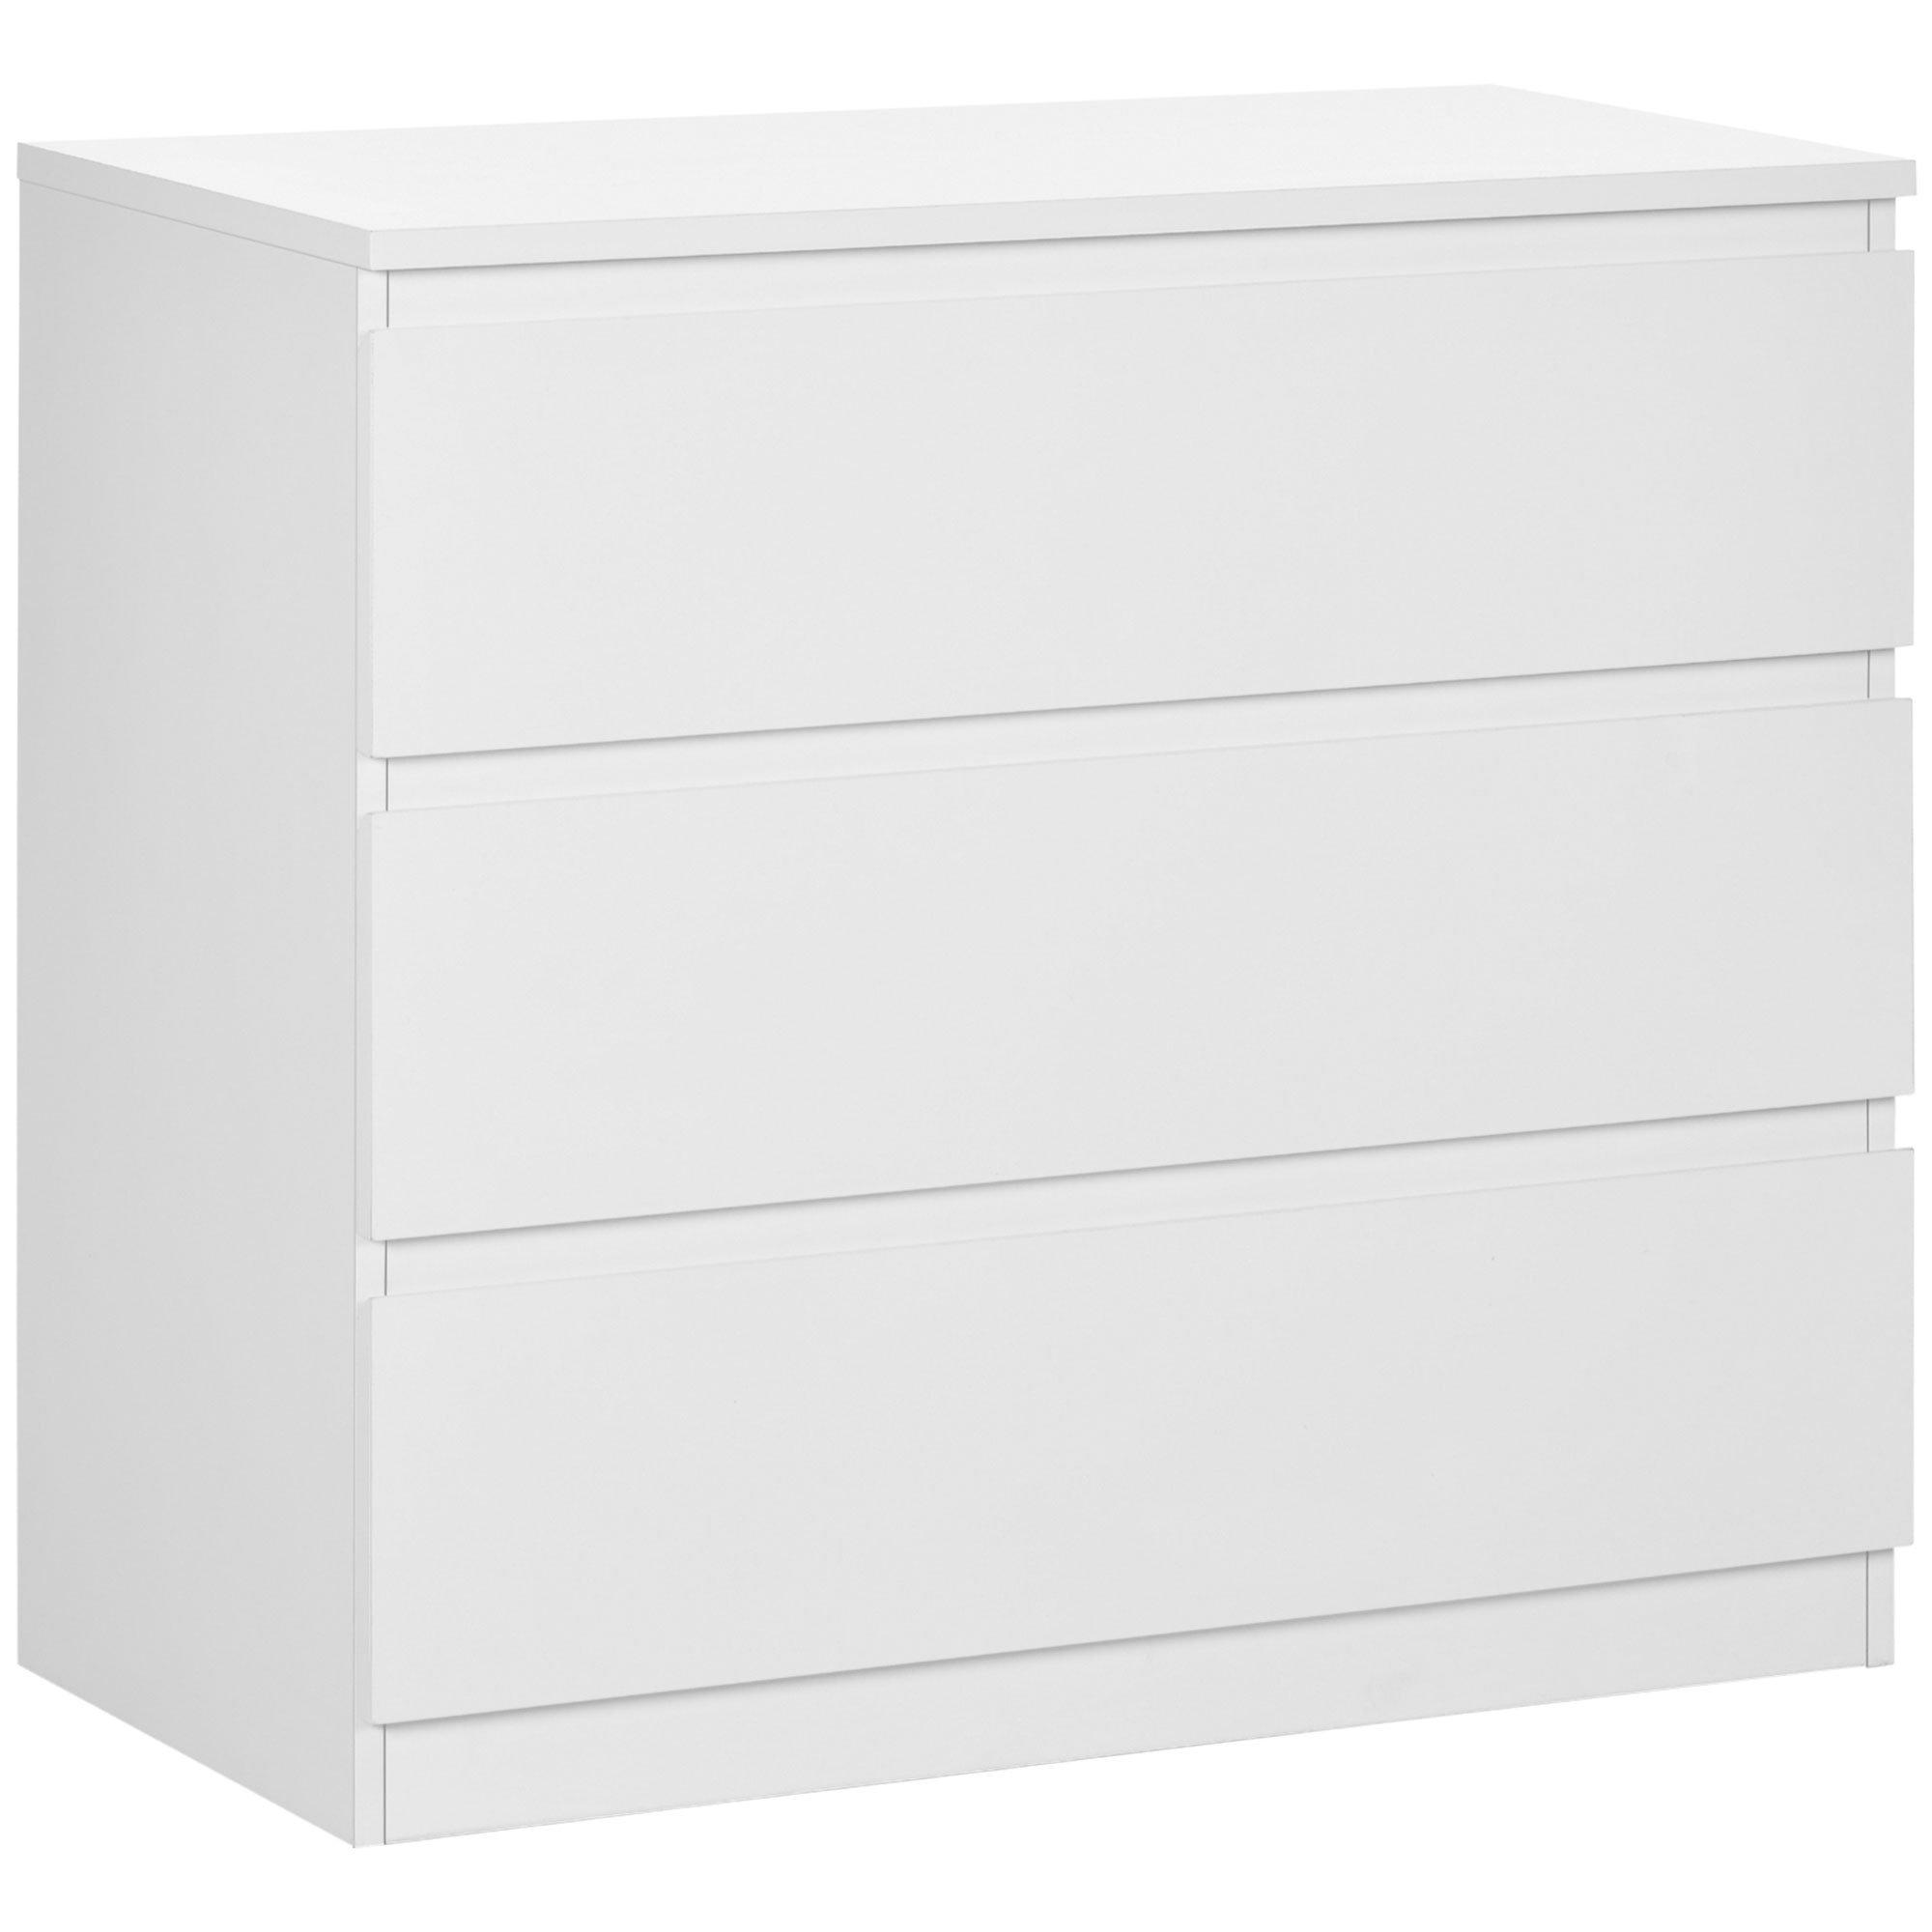 Chest of Drawers 3 Drawer Dresser Storage Organiser for Bedroom